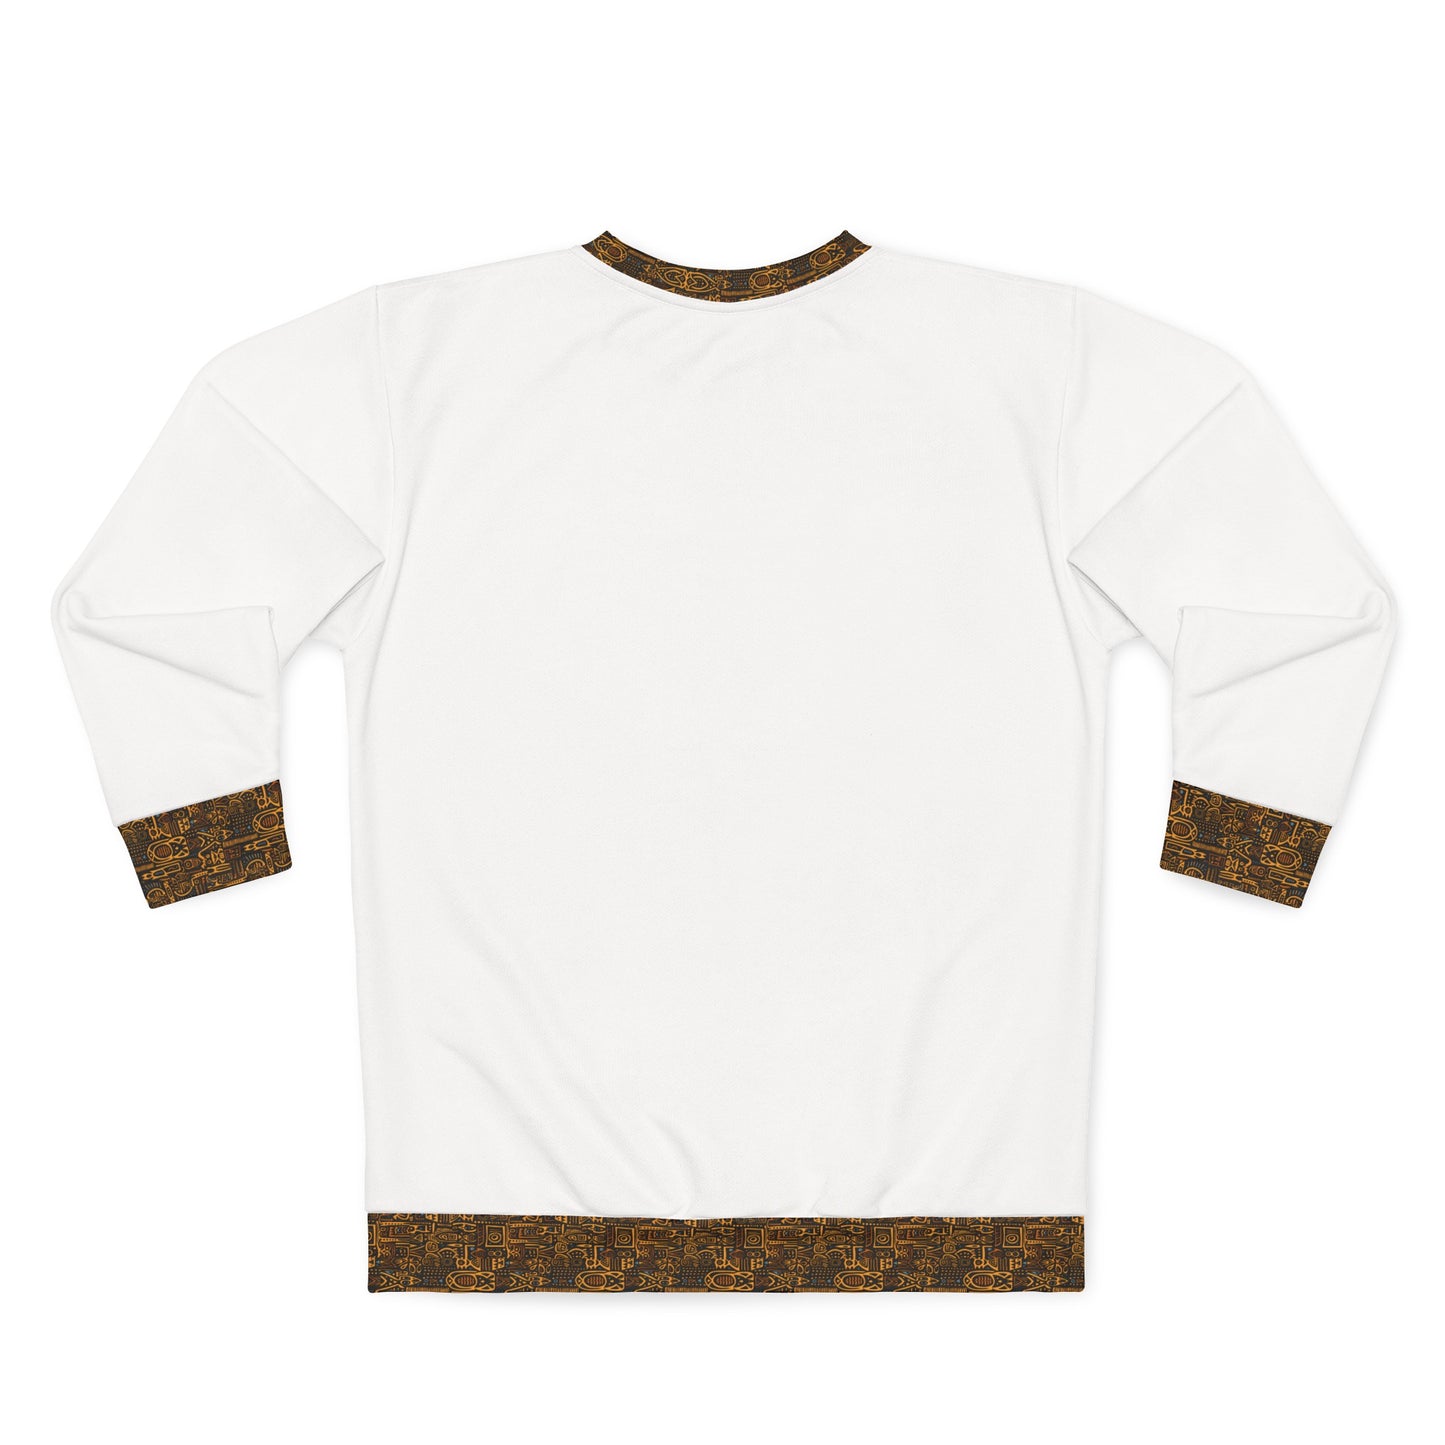 Sweatshirt Homme "White Édition" - Motifs Wax, Ambiance Africaine